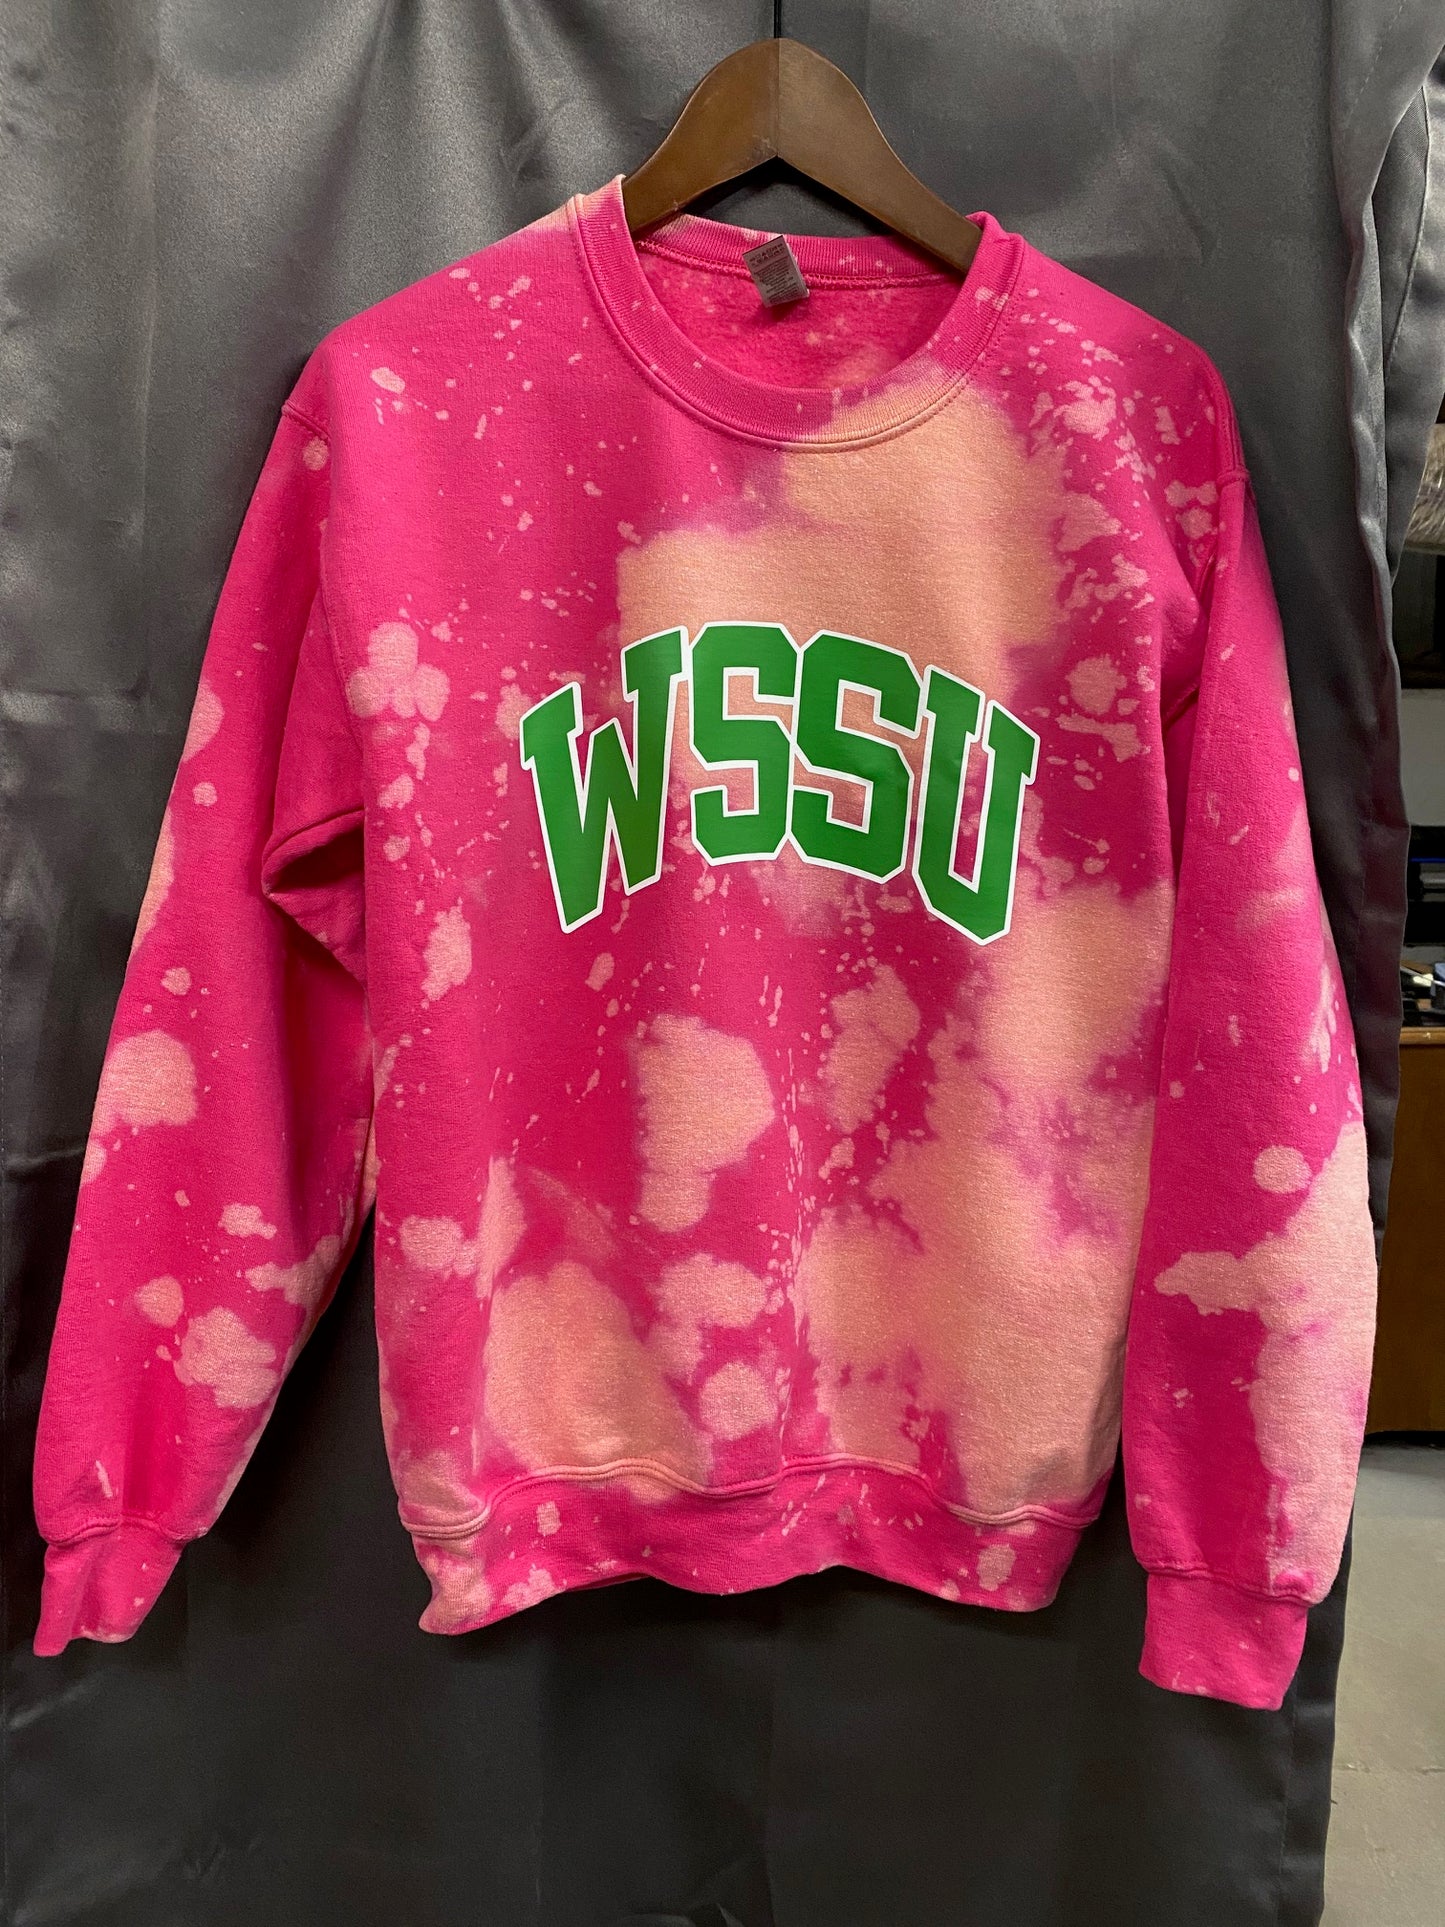 wssu winston salem pink and green AKA Alpha Kappa Alpha Sweatshirt hand bleached handmade sweater